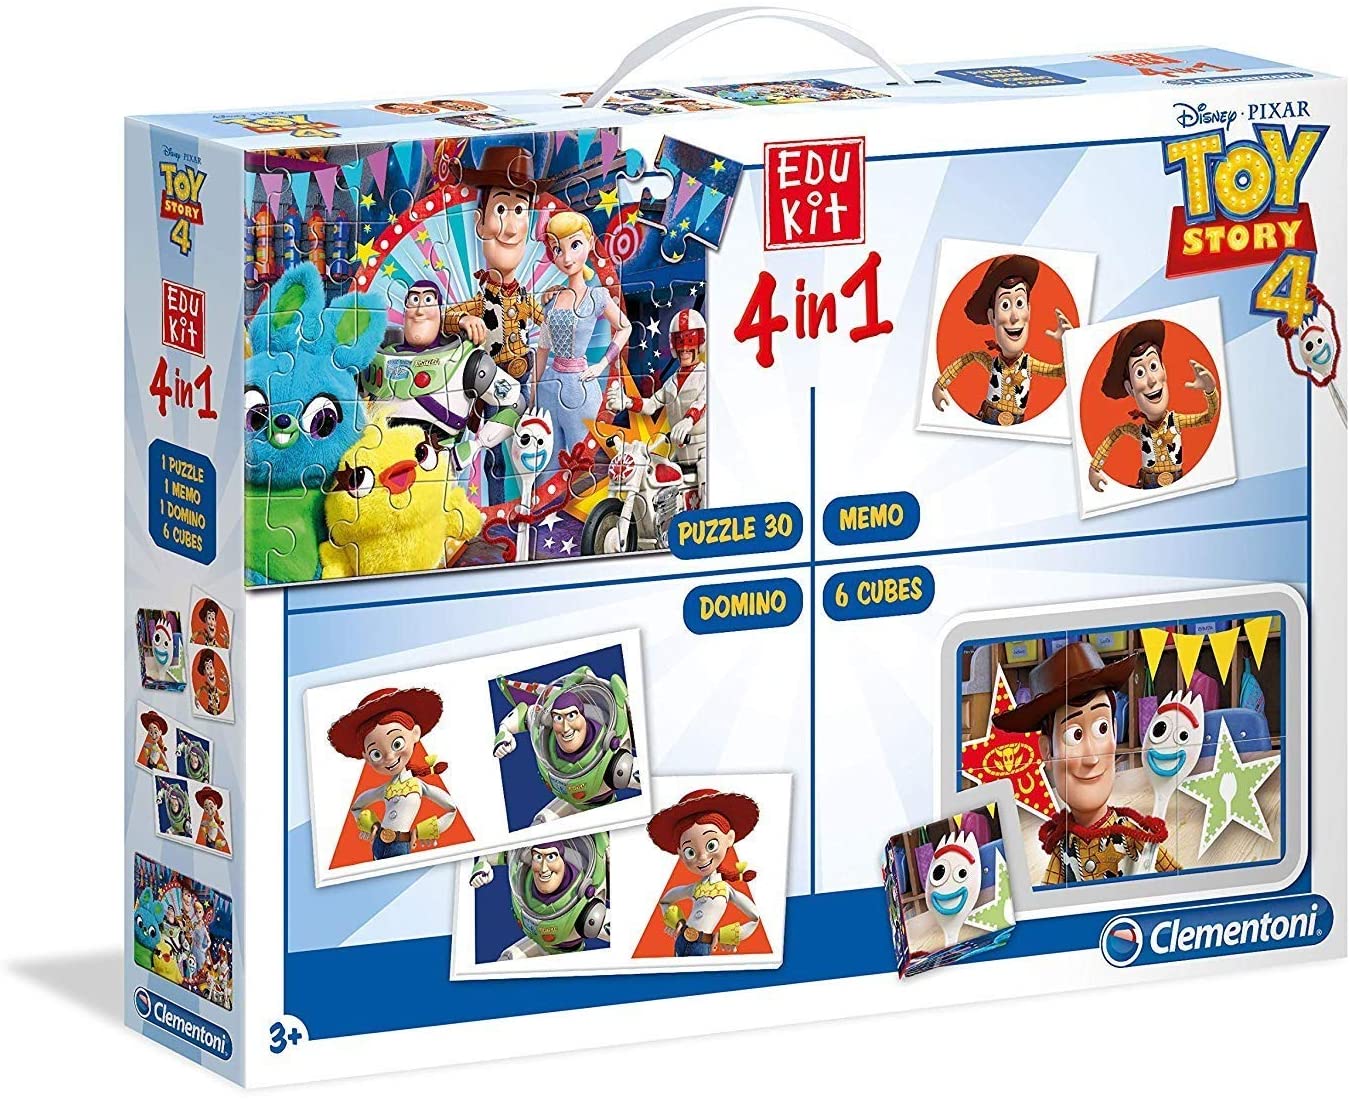 Clementoni 18058 Edukit 4 In 1 Toy Story 4 Multi-Coloured